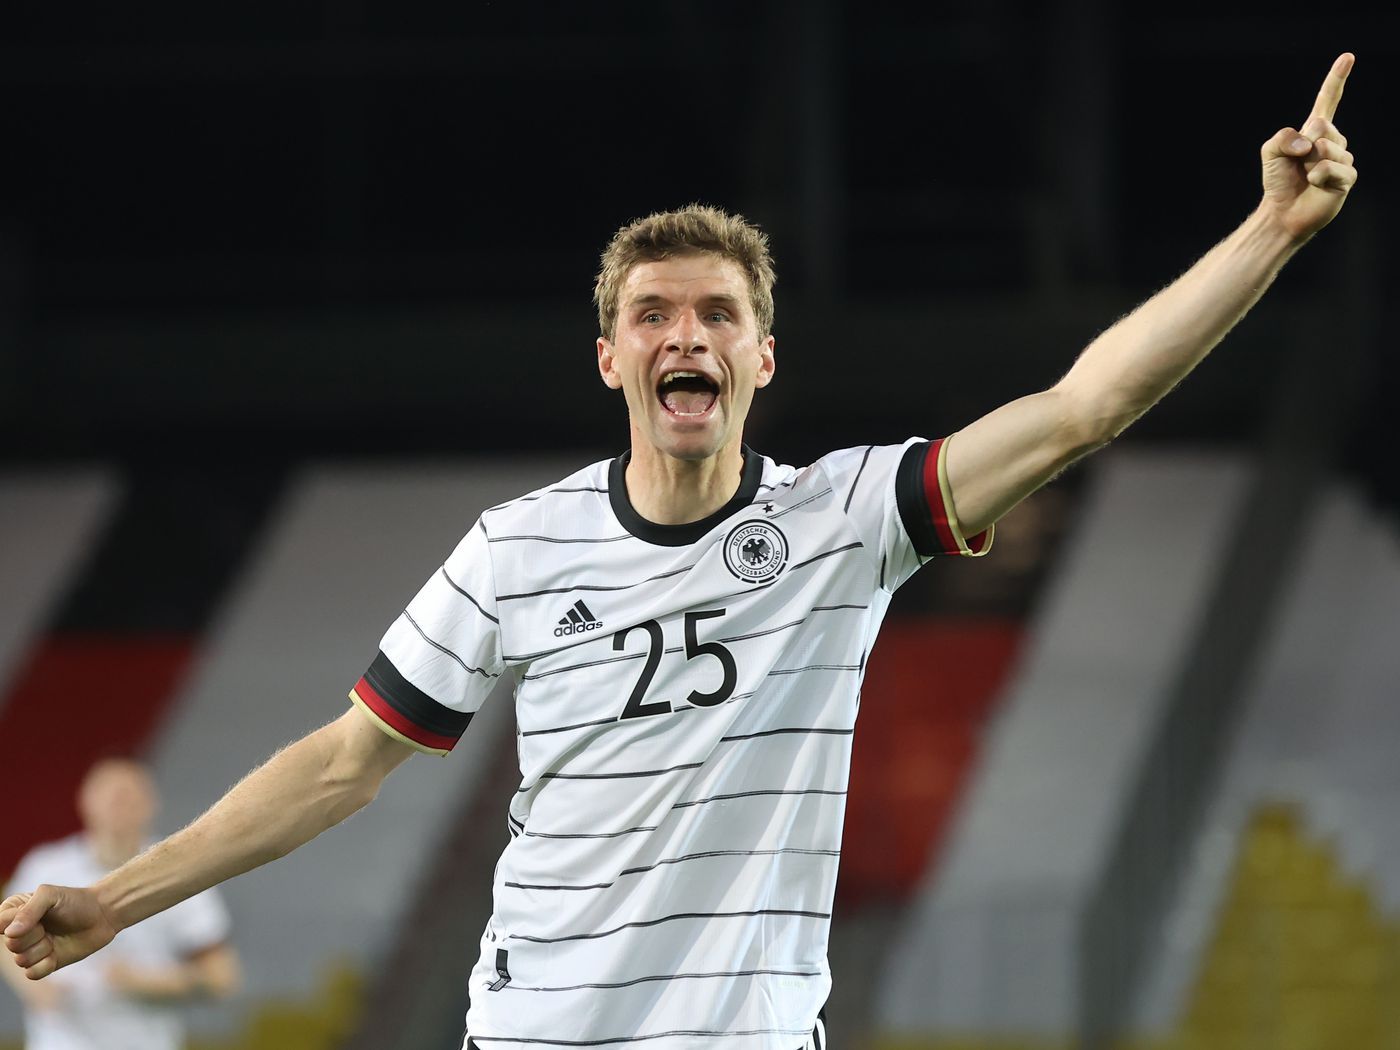 Bayern Munich's Thomas Müller talks return to international play for Germany after Denmark draw Football Works